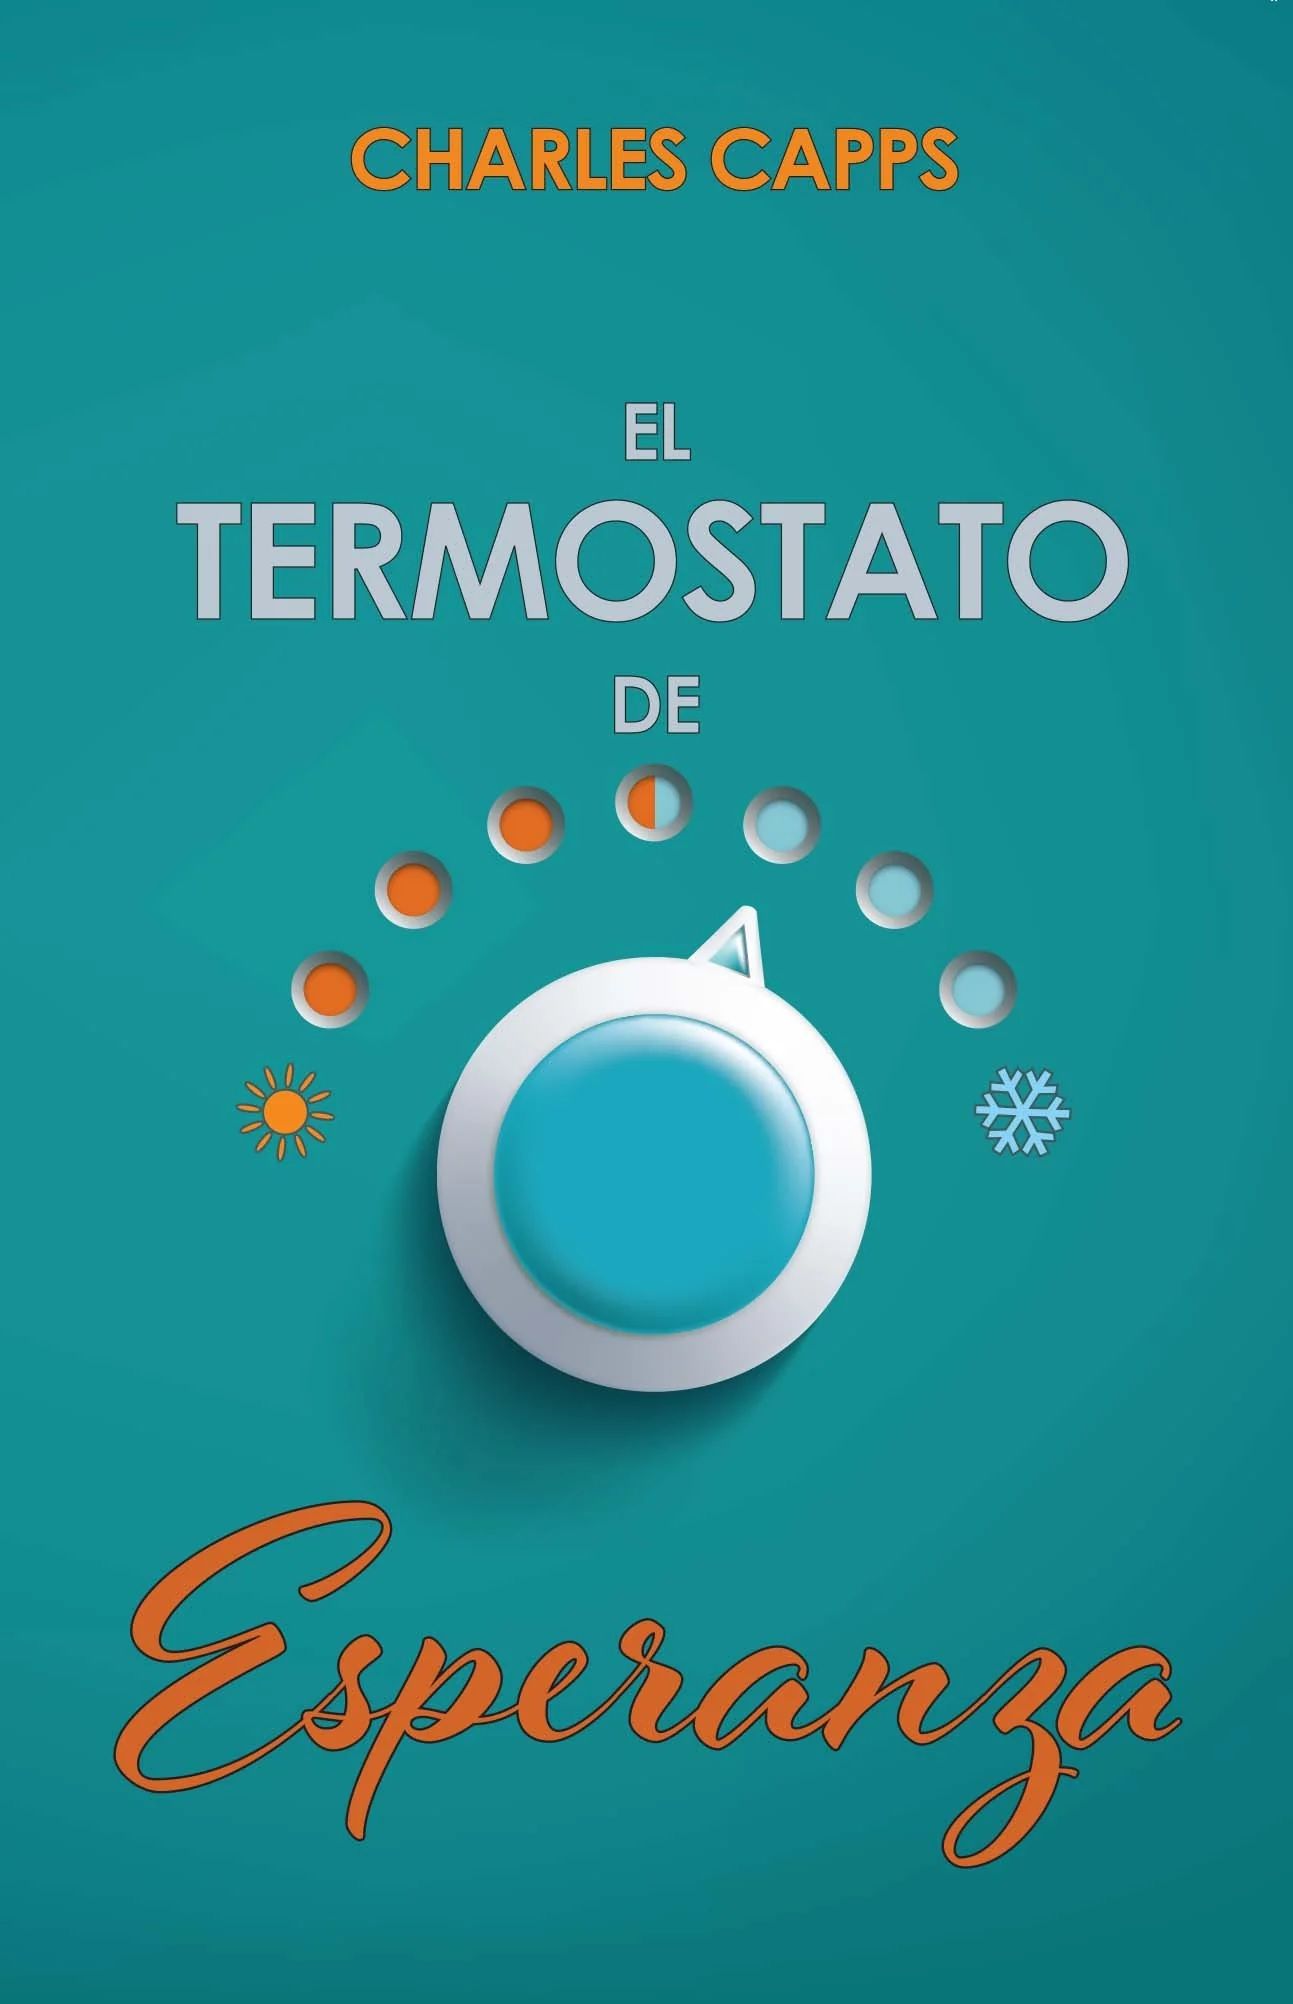 Charles Capps: El Termostato de Esperanza (The Thermostat of Hope)